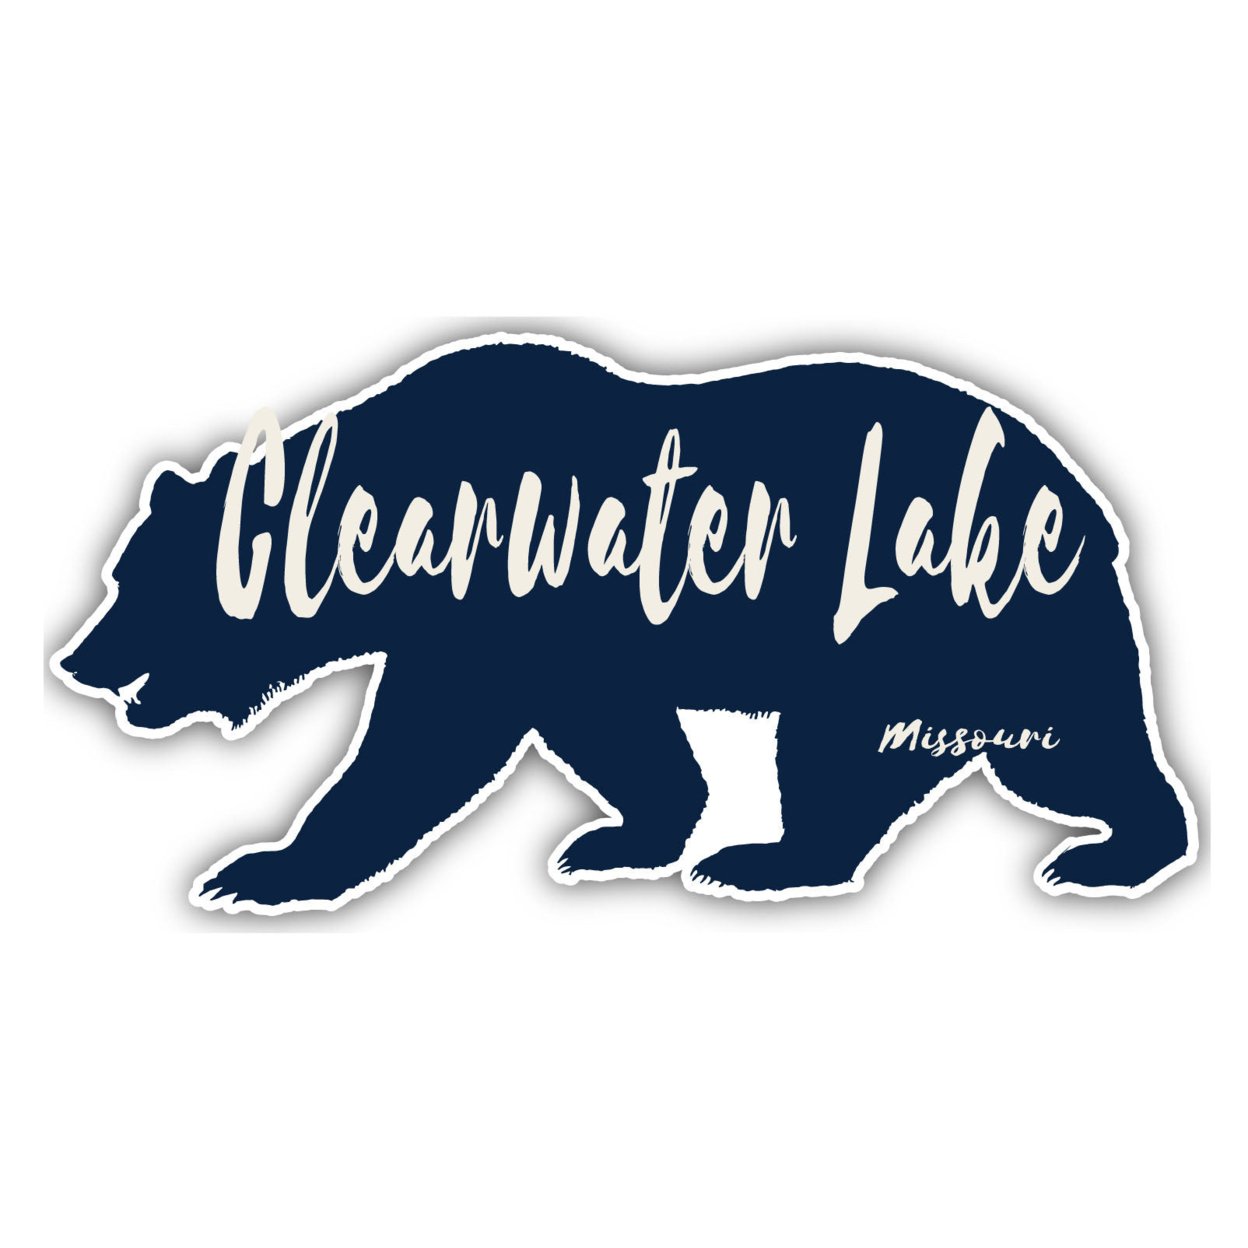 Clearwater Lake Missouri Souvenir Decorative Stickers (Choose Theme And Size) - Single Unit, 12-Inch, Bear